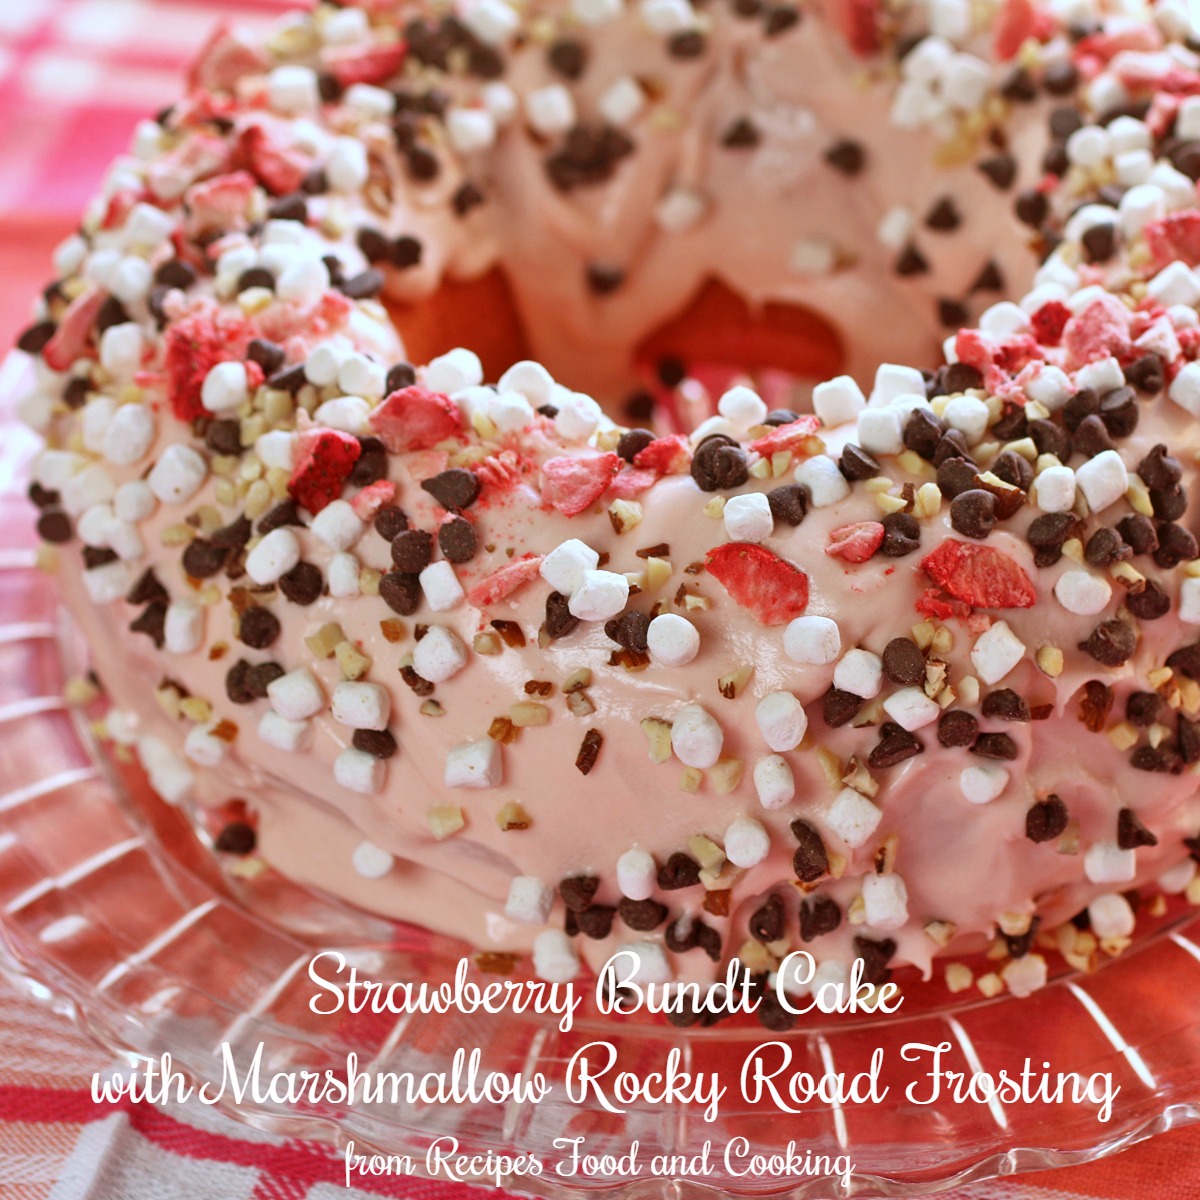 Strawberry Bundt Cake with Marshmallow Rocky Road Frosting